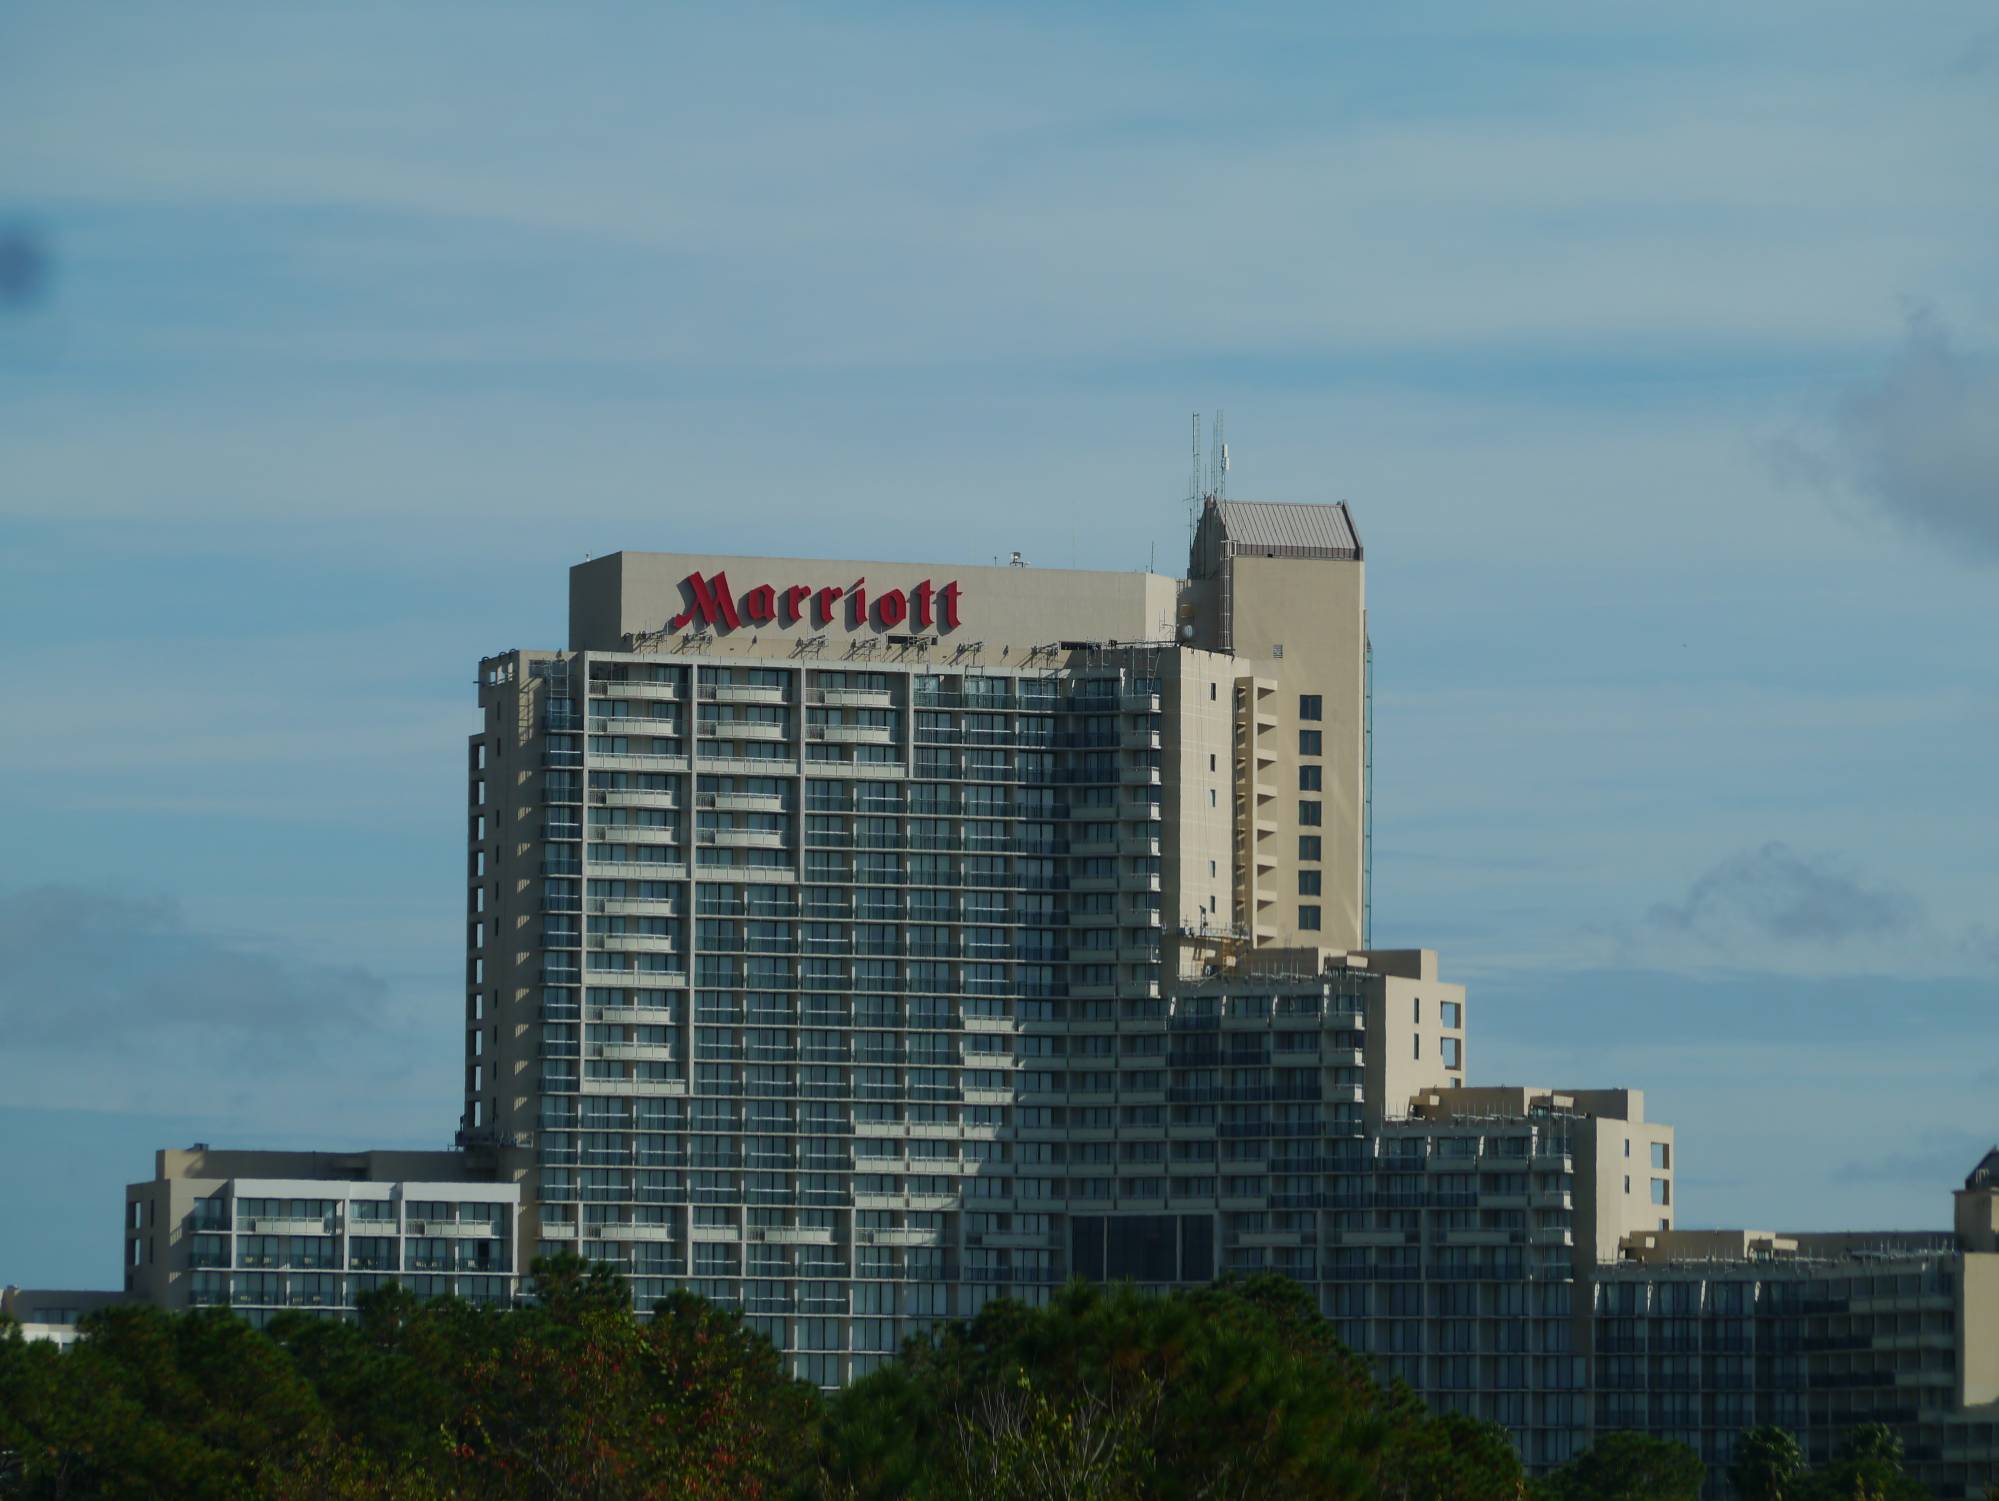 Orlando World Center Marriott